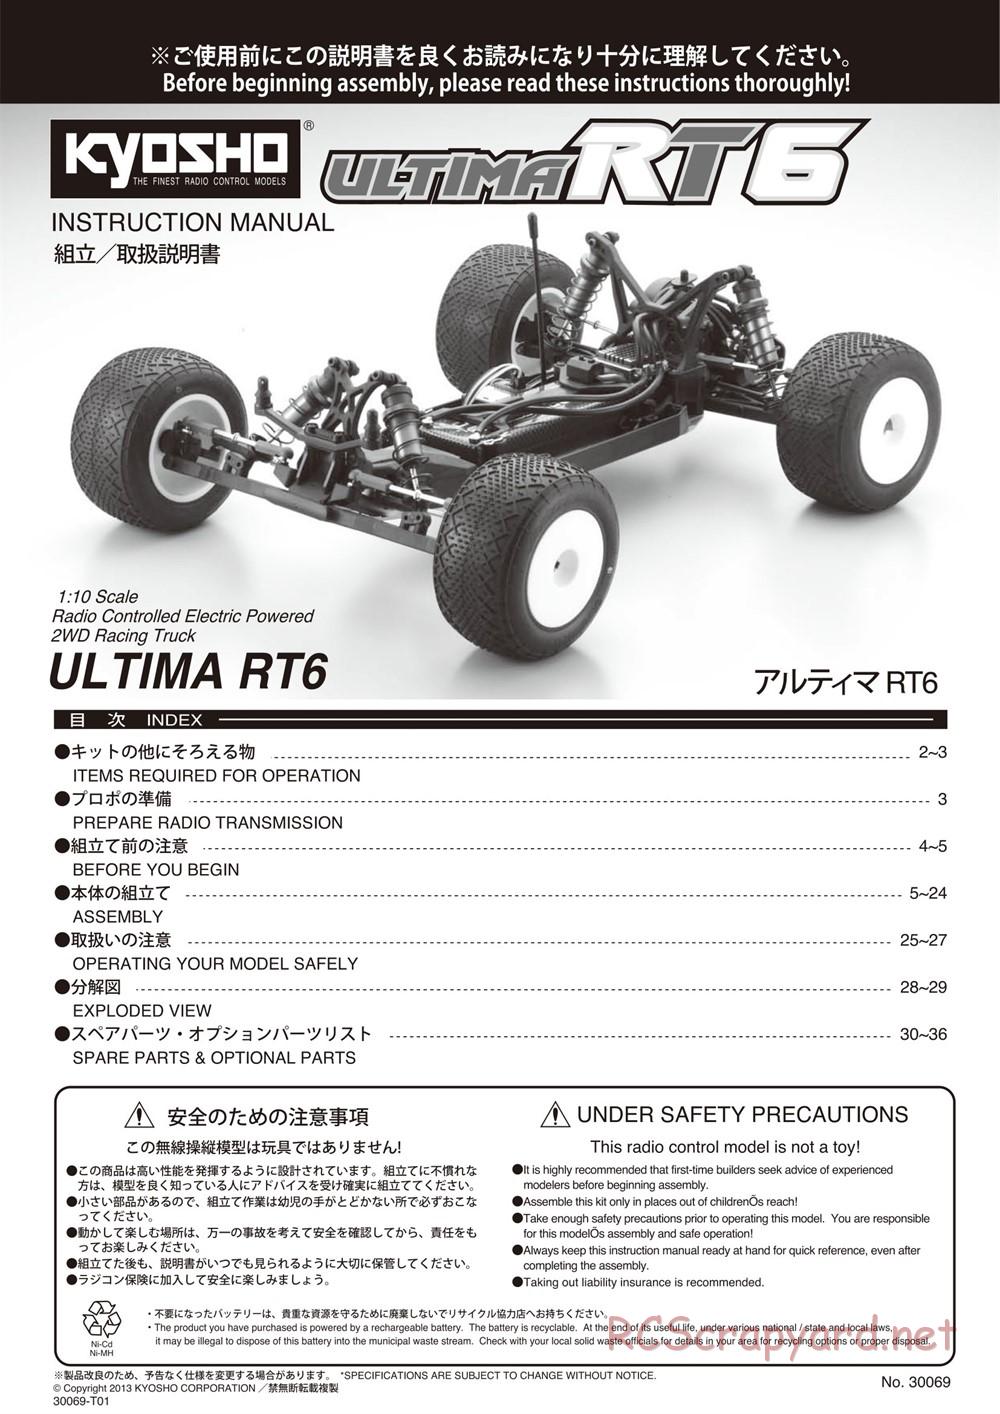 Kyosho - Ultima RT6 - Manual - Page 1